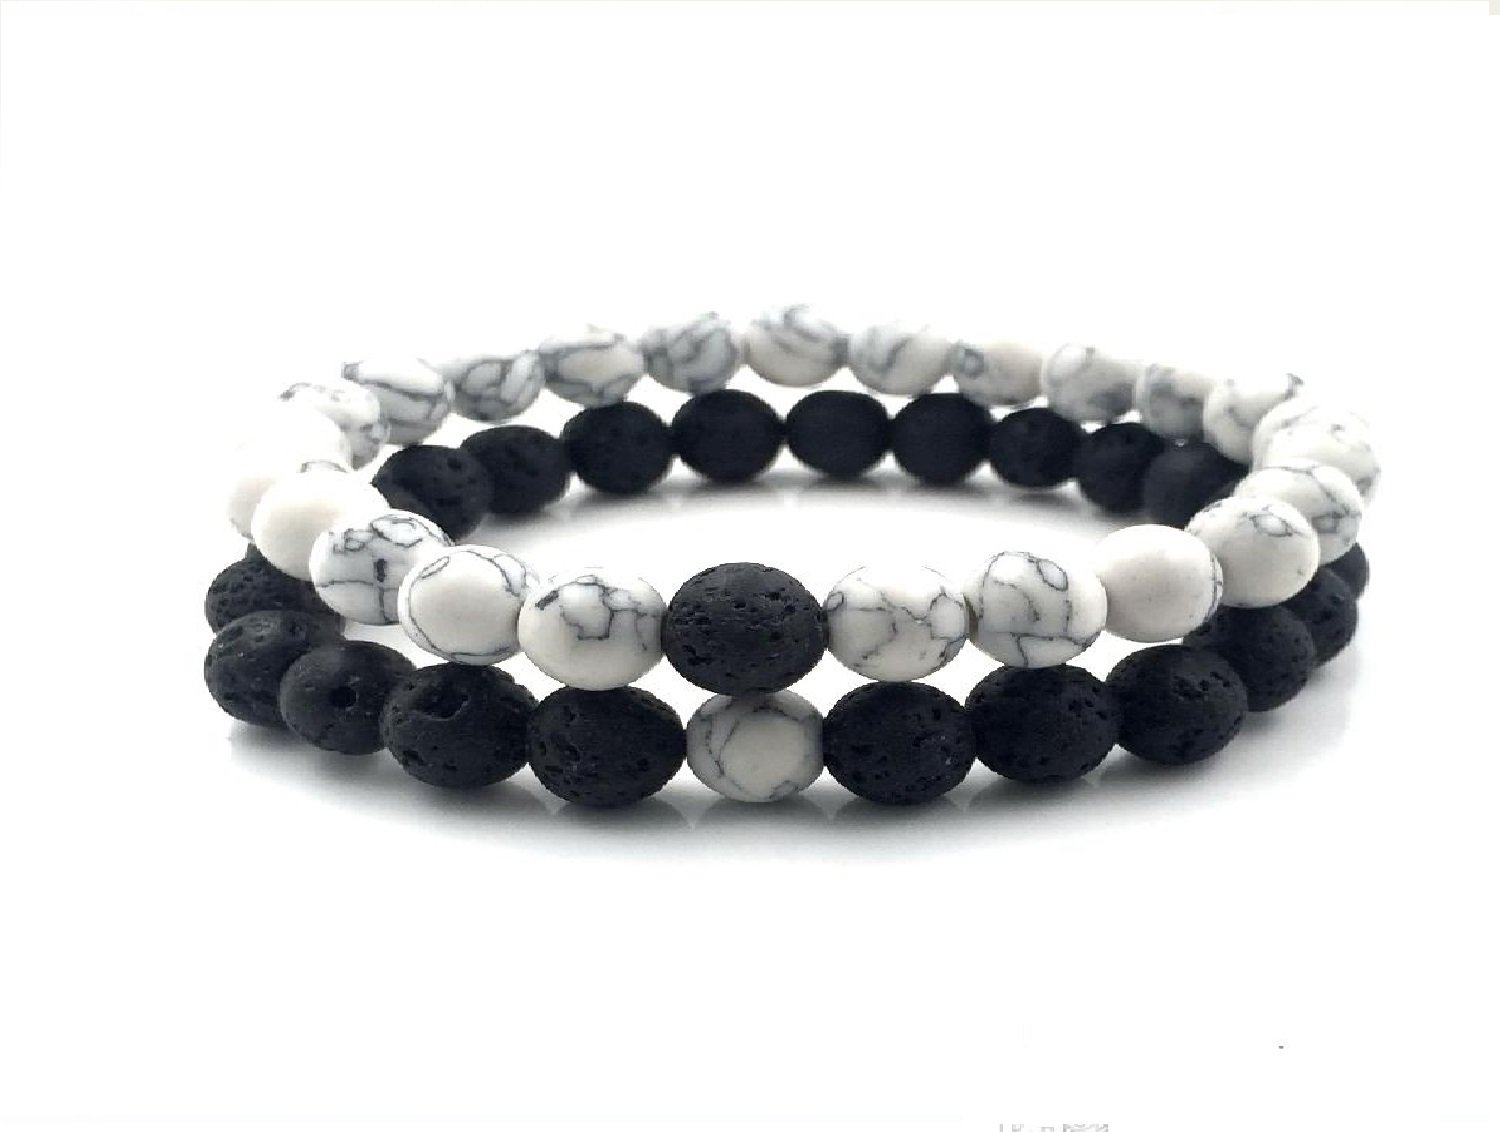 White Howlite stone and Volcanic Rock Lava Stone Beads Bracelets stretch set